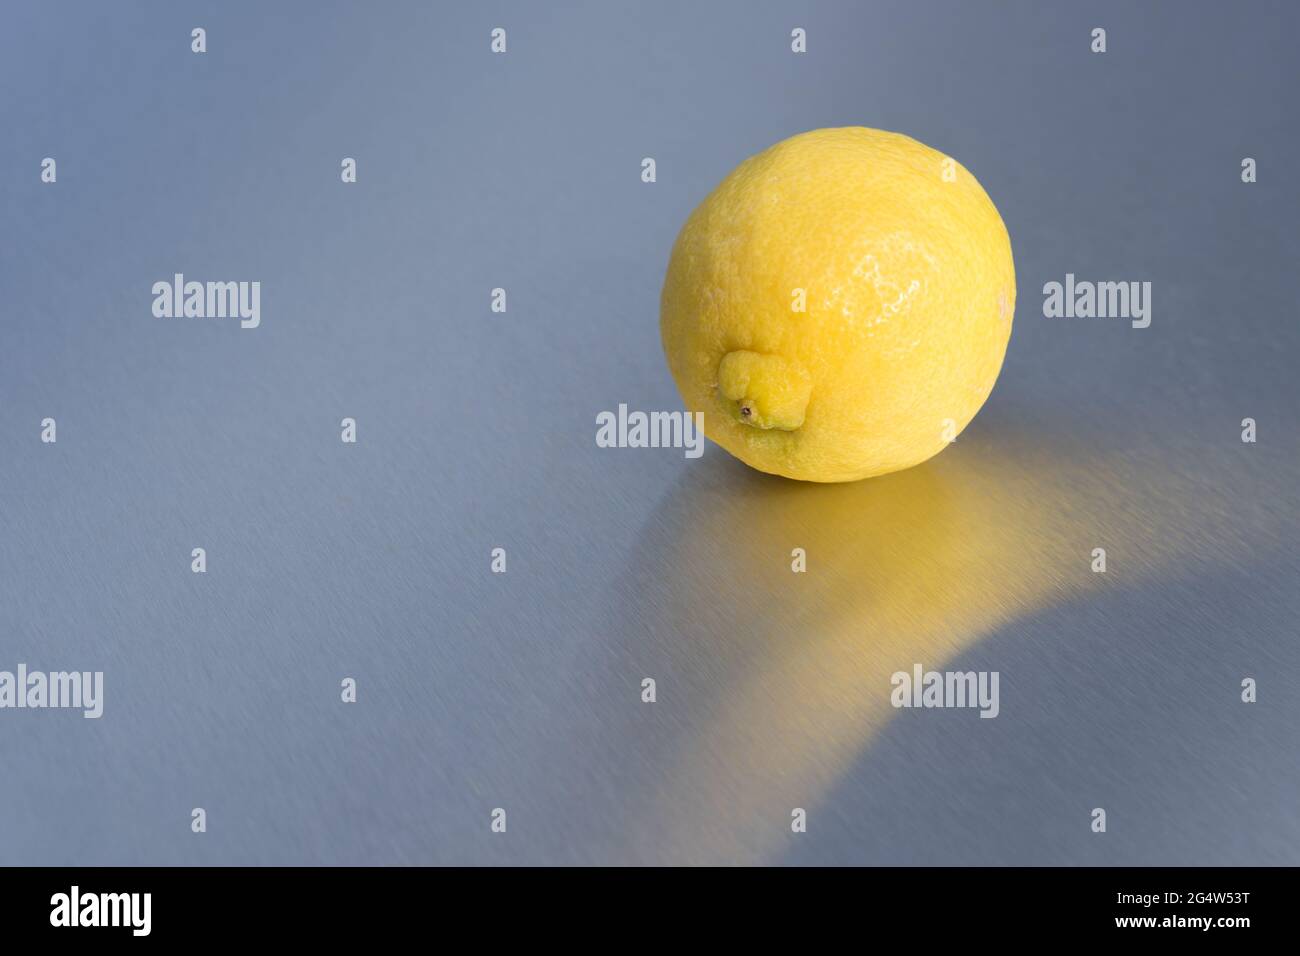 minimalist bright yellow lemon and reflection on clean background sunny fruit Stock Photo